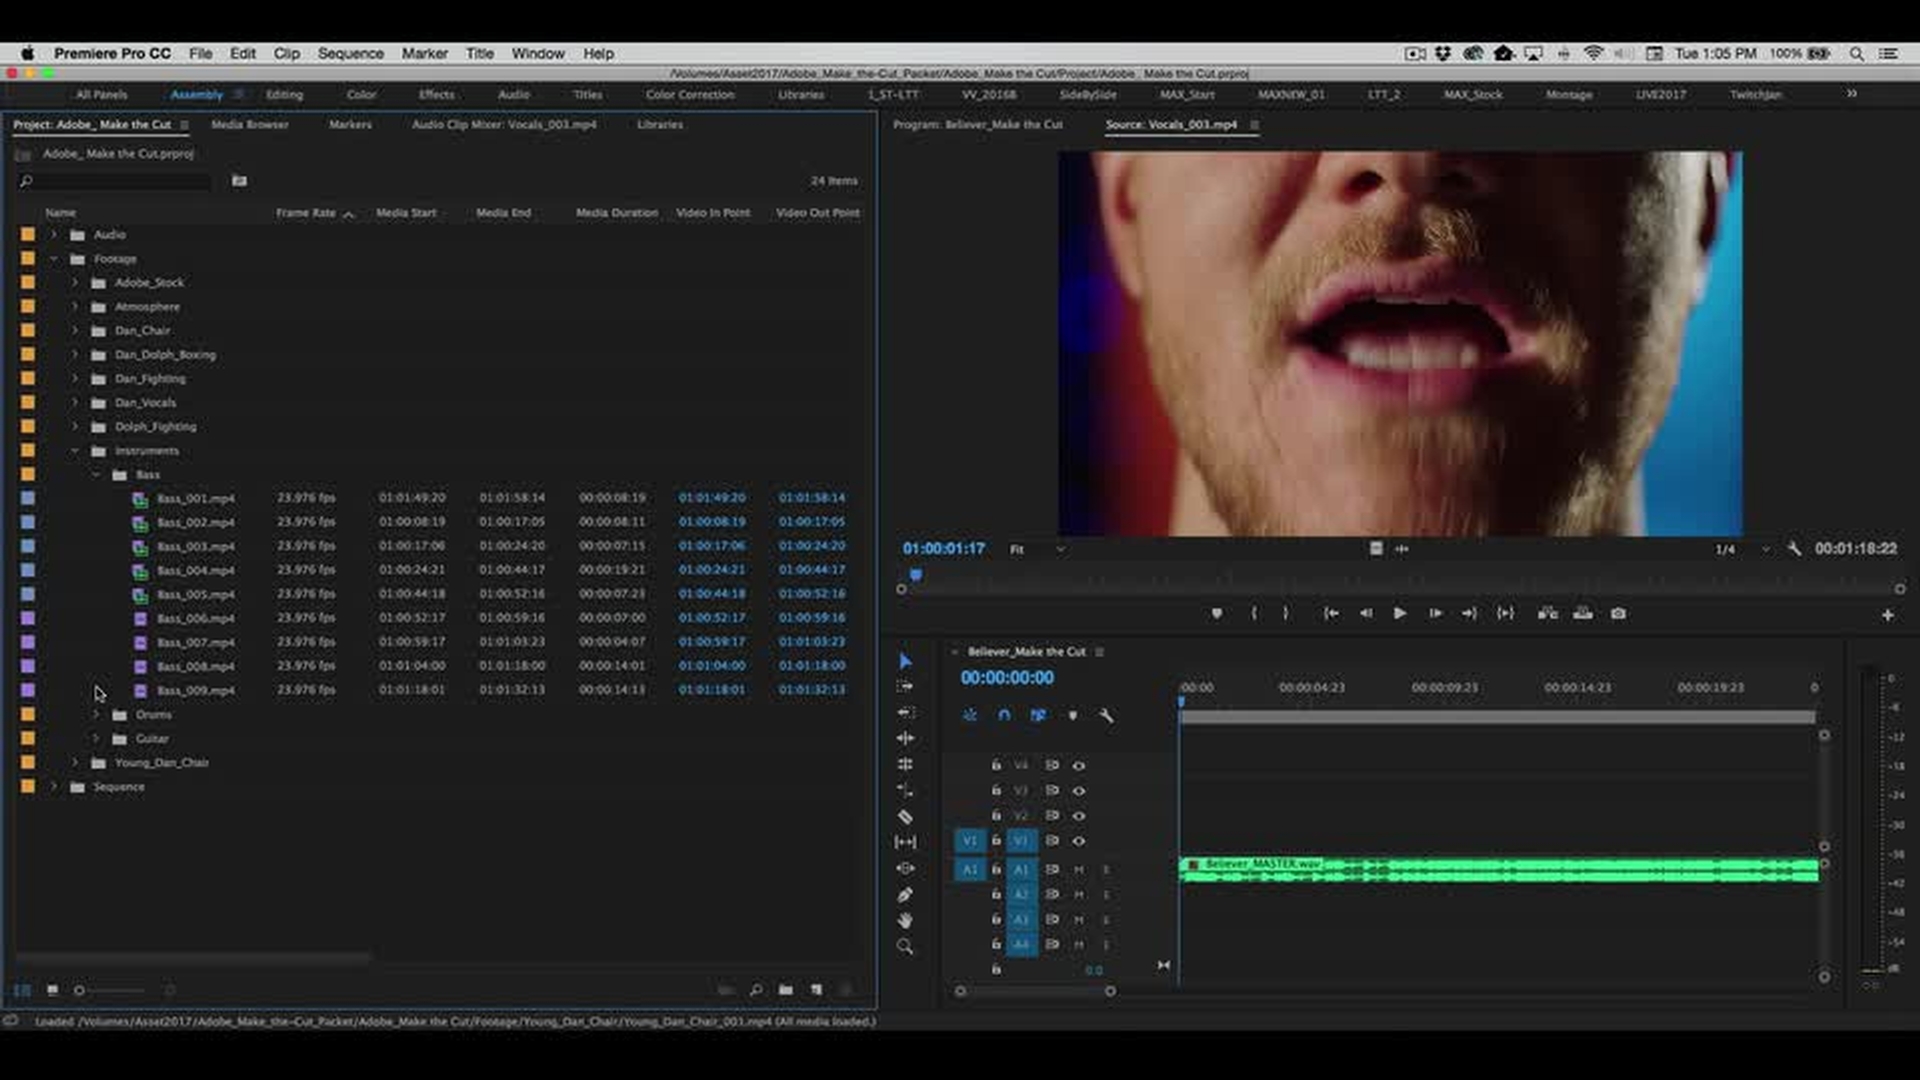 Watch Imagine Dragons' winning “Believer” music video for Adobe's